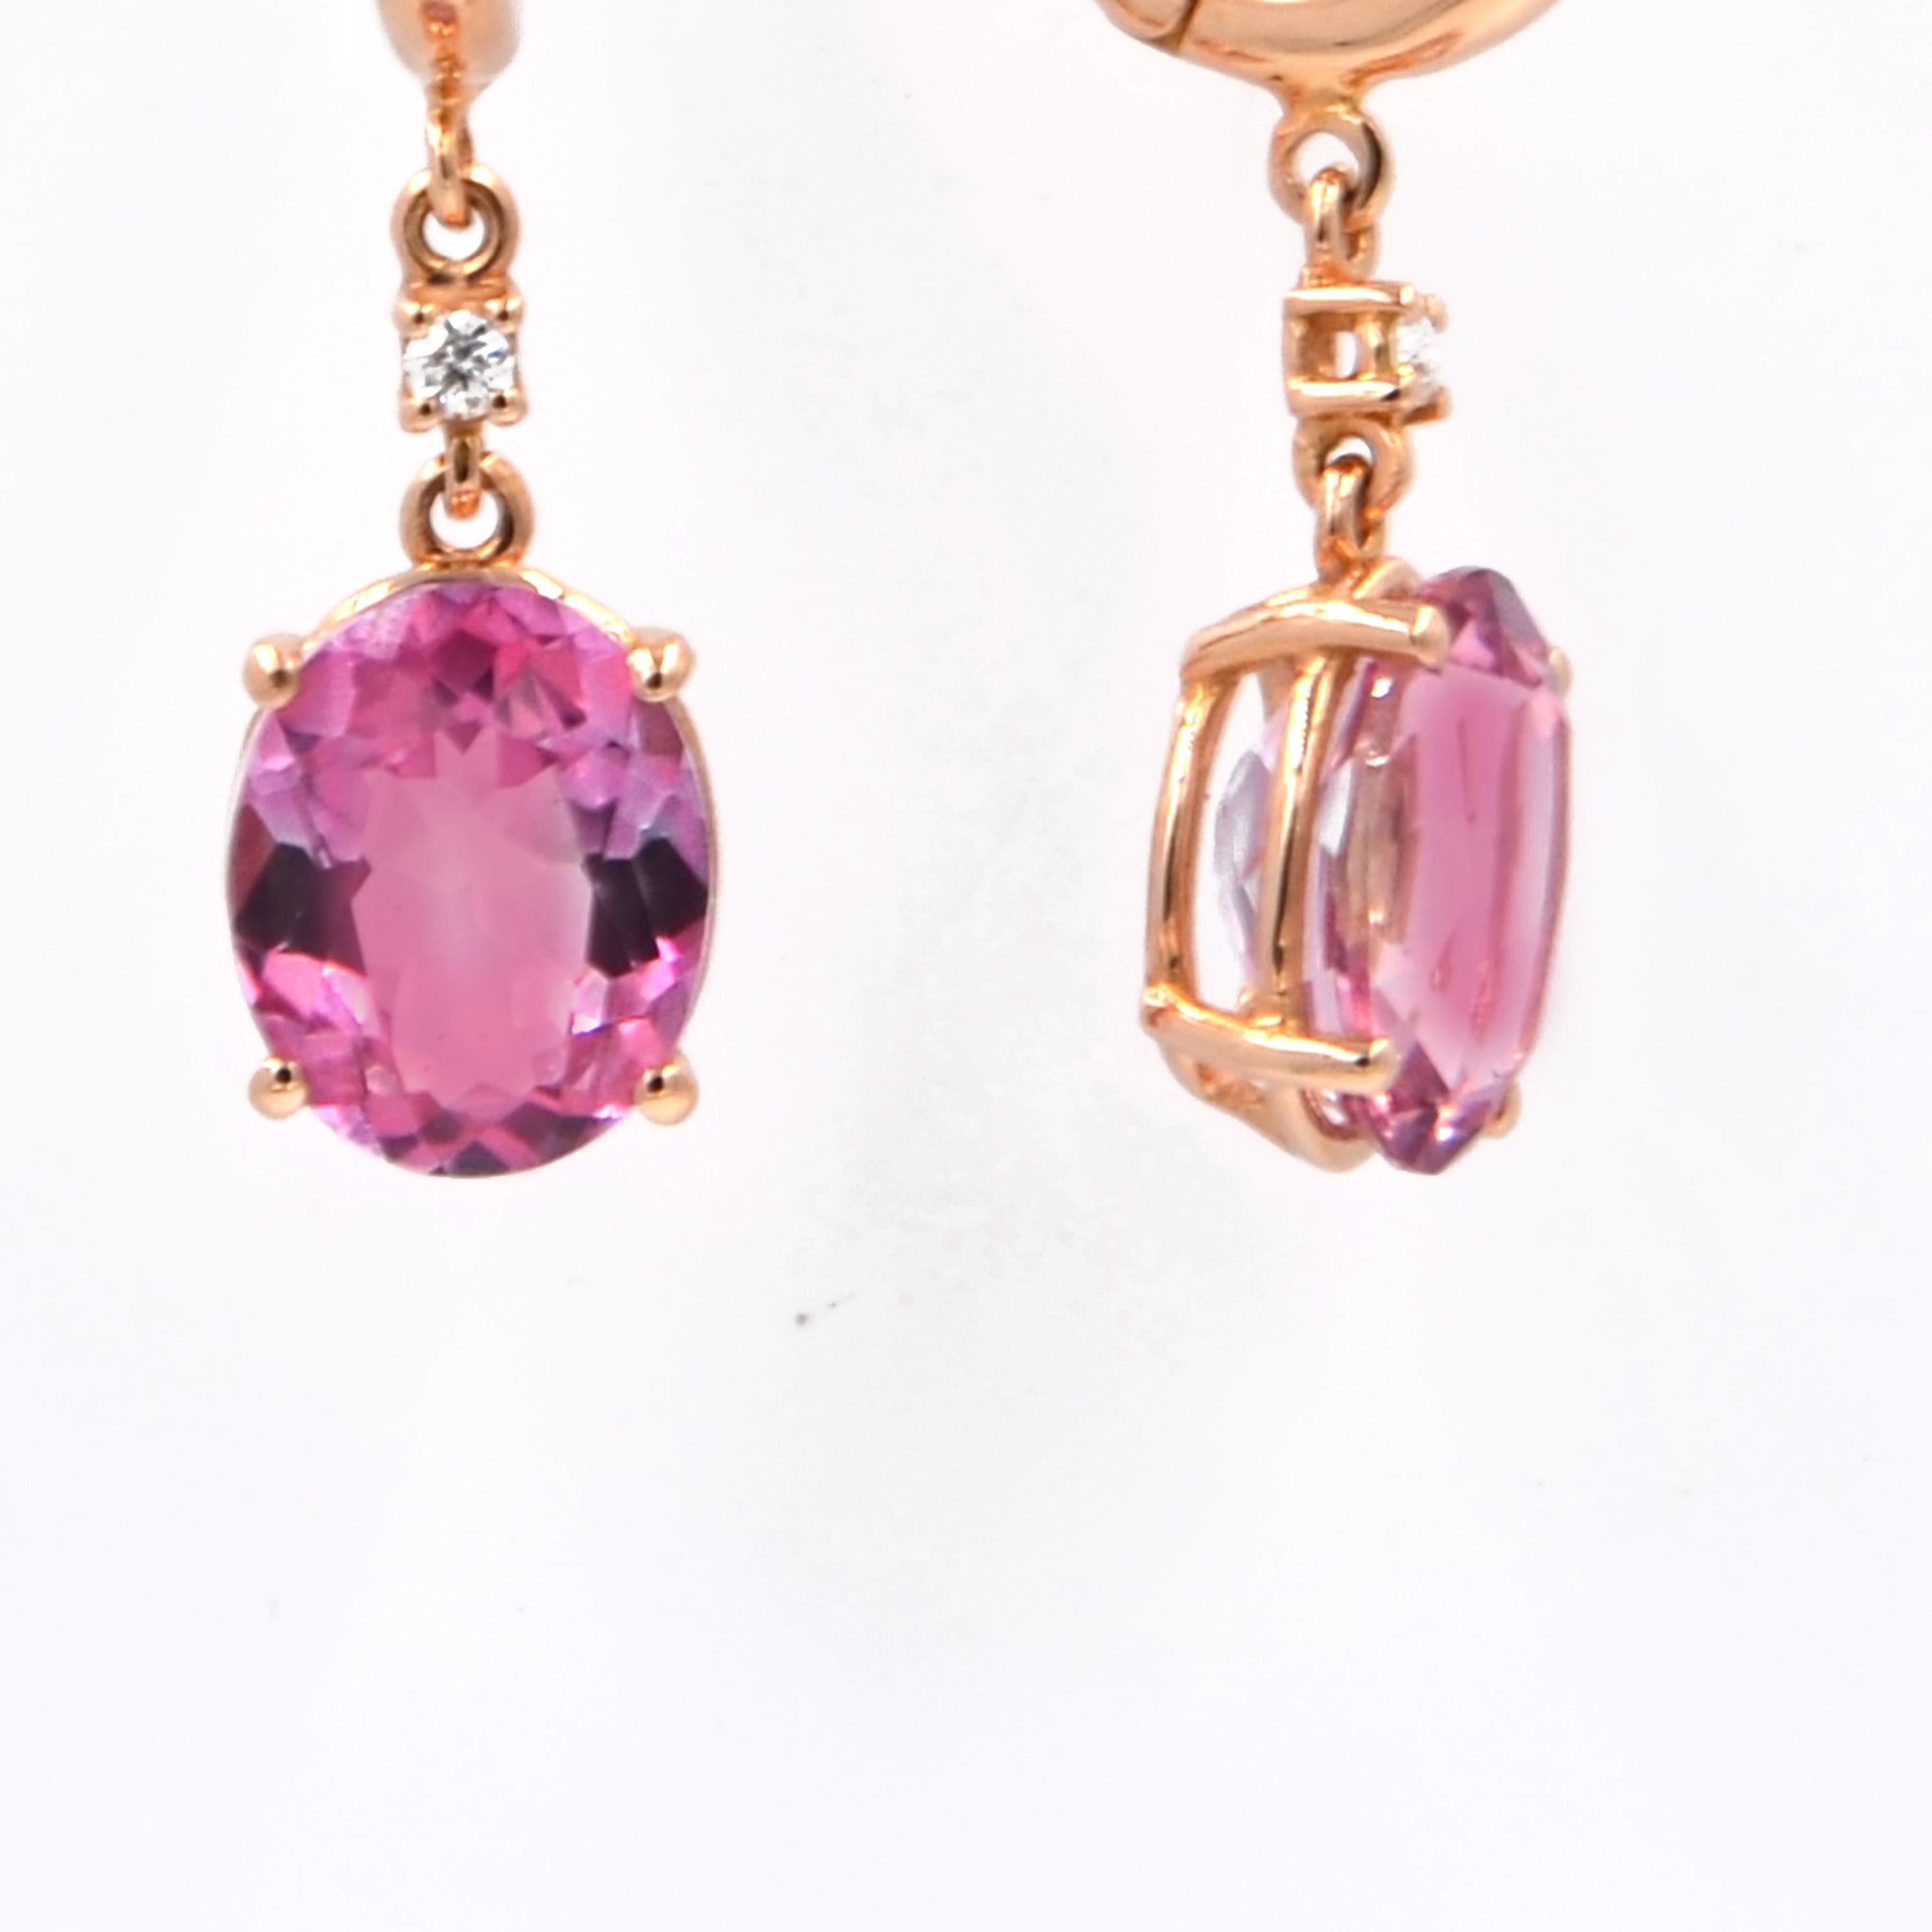 Contemporary 18 Karat Rose Gold Garavelli Earrings Featuring Pink Topaz and Diamonds